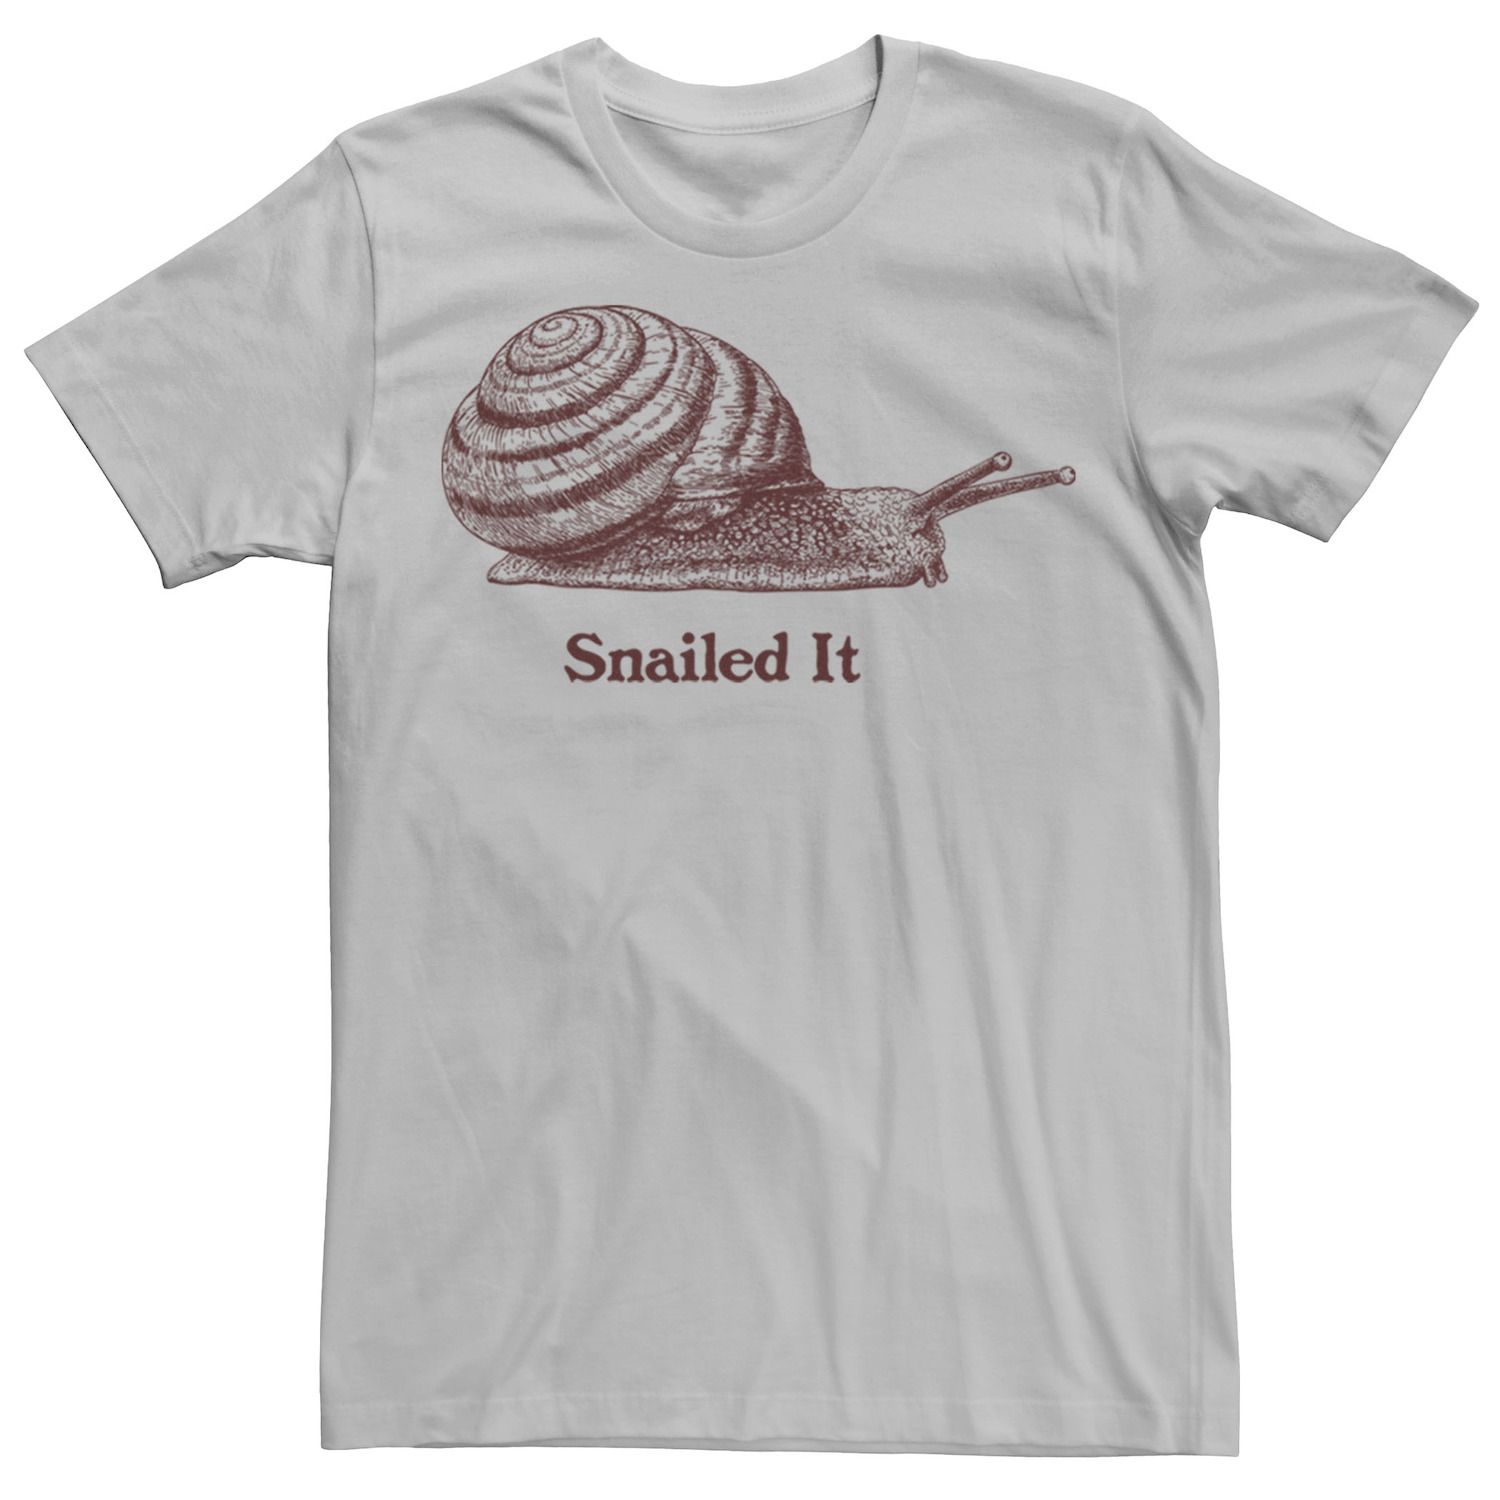 Мужская футболка Snailed It с портретом улитки Licensed Character мужская футболка улитки s желтый